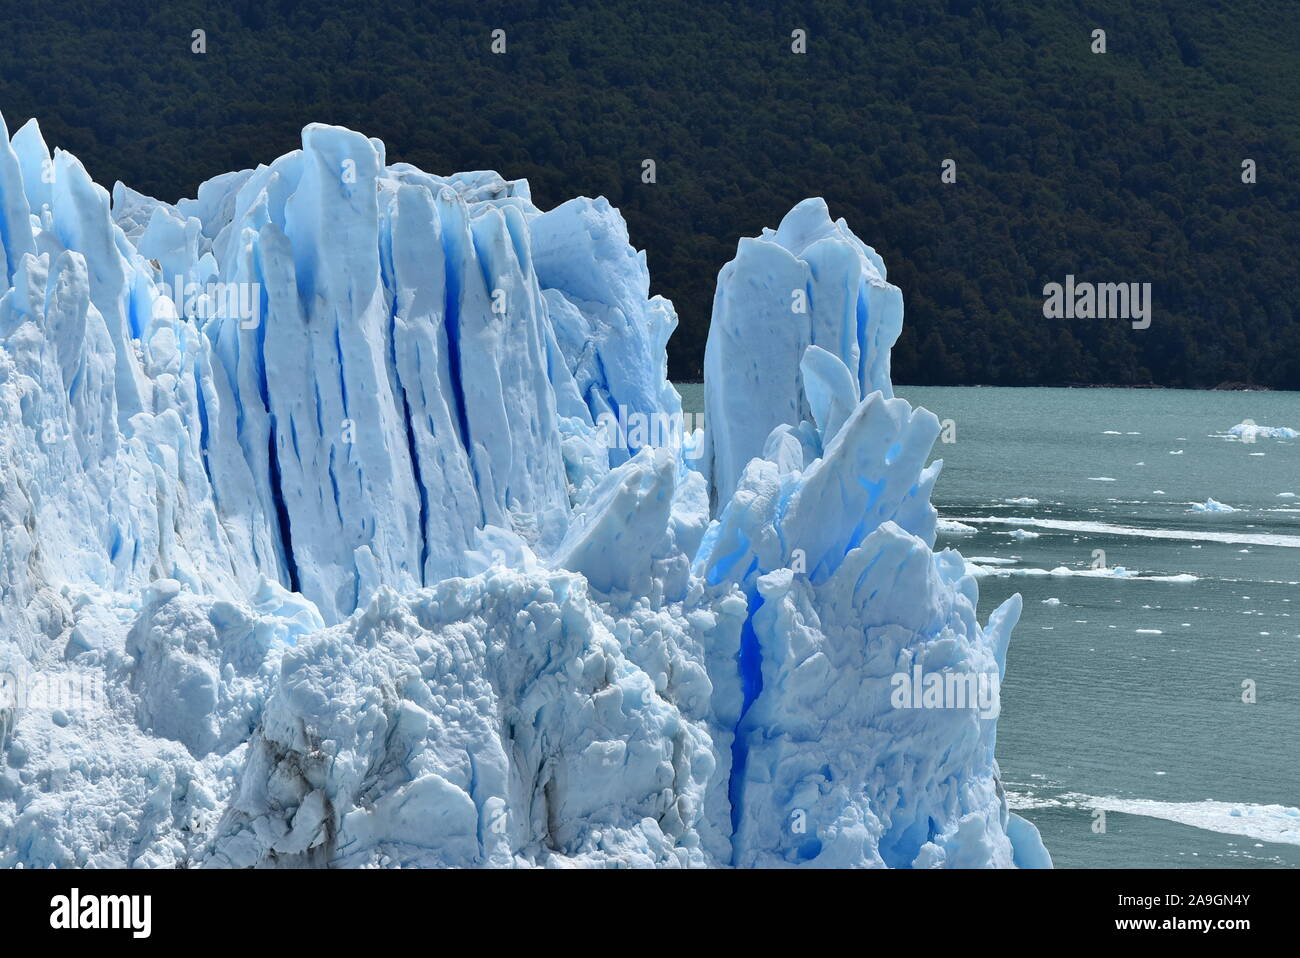 Patagonia inverno, ghiacciaio Perito Moreno Foto Stock